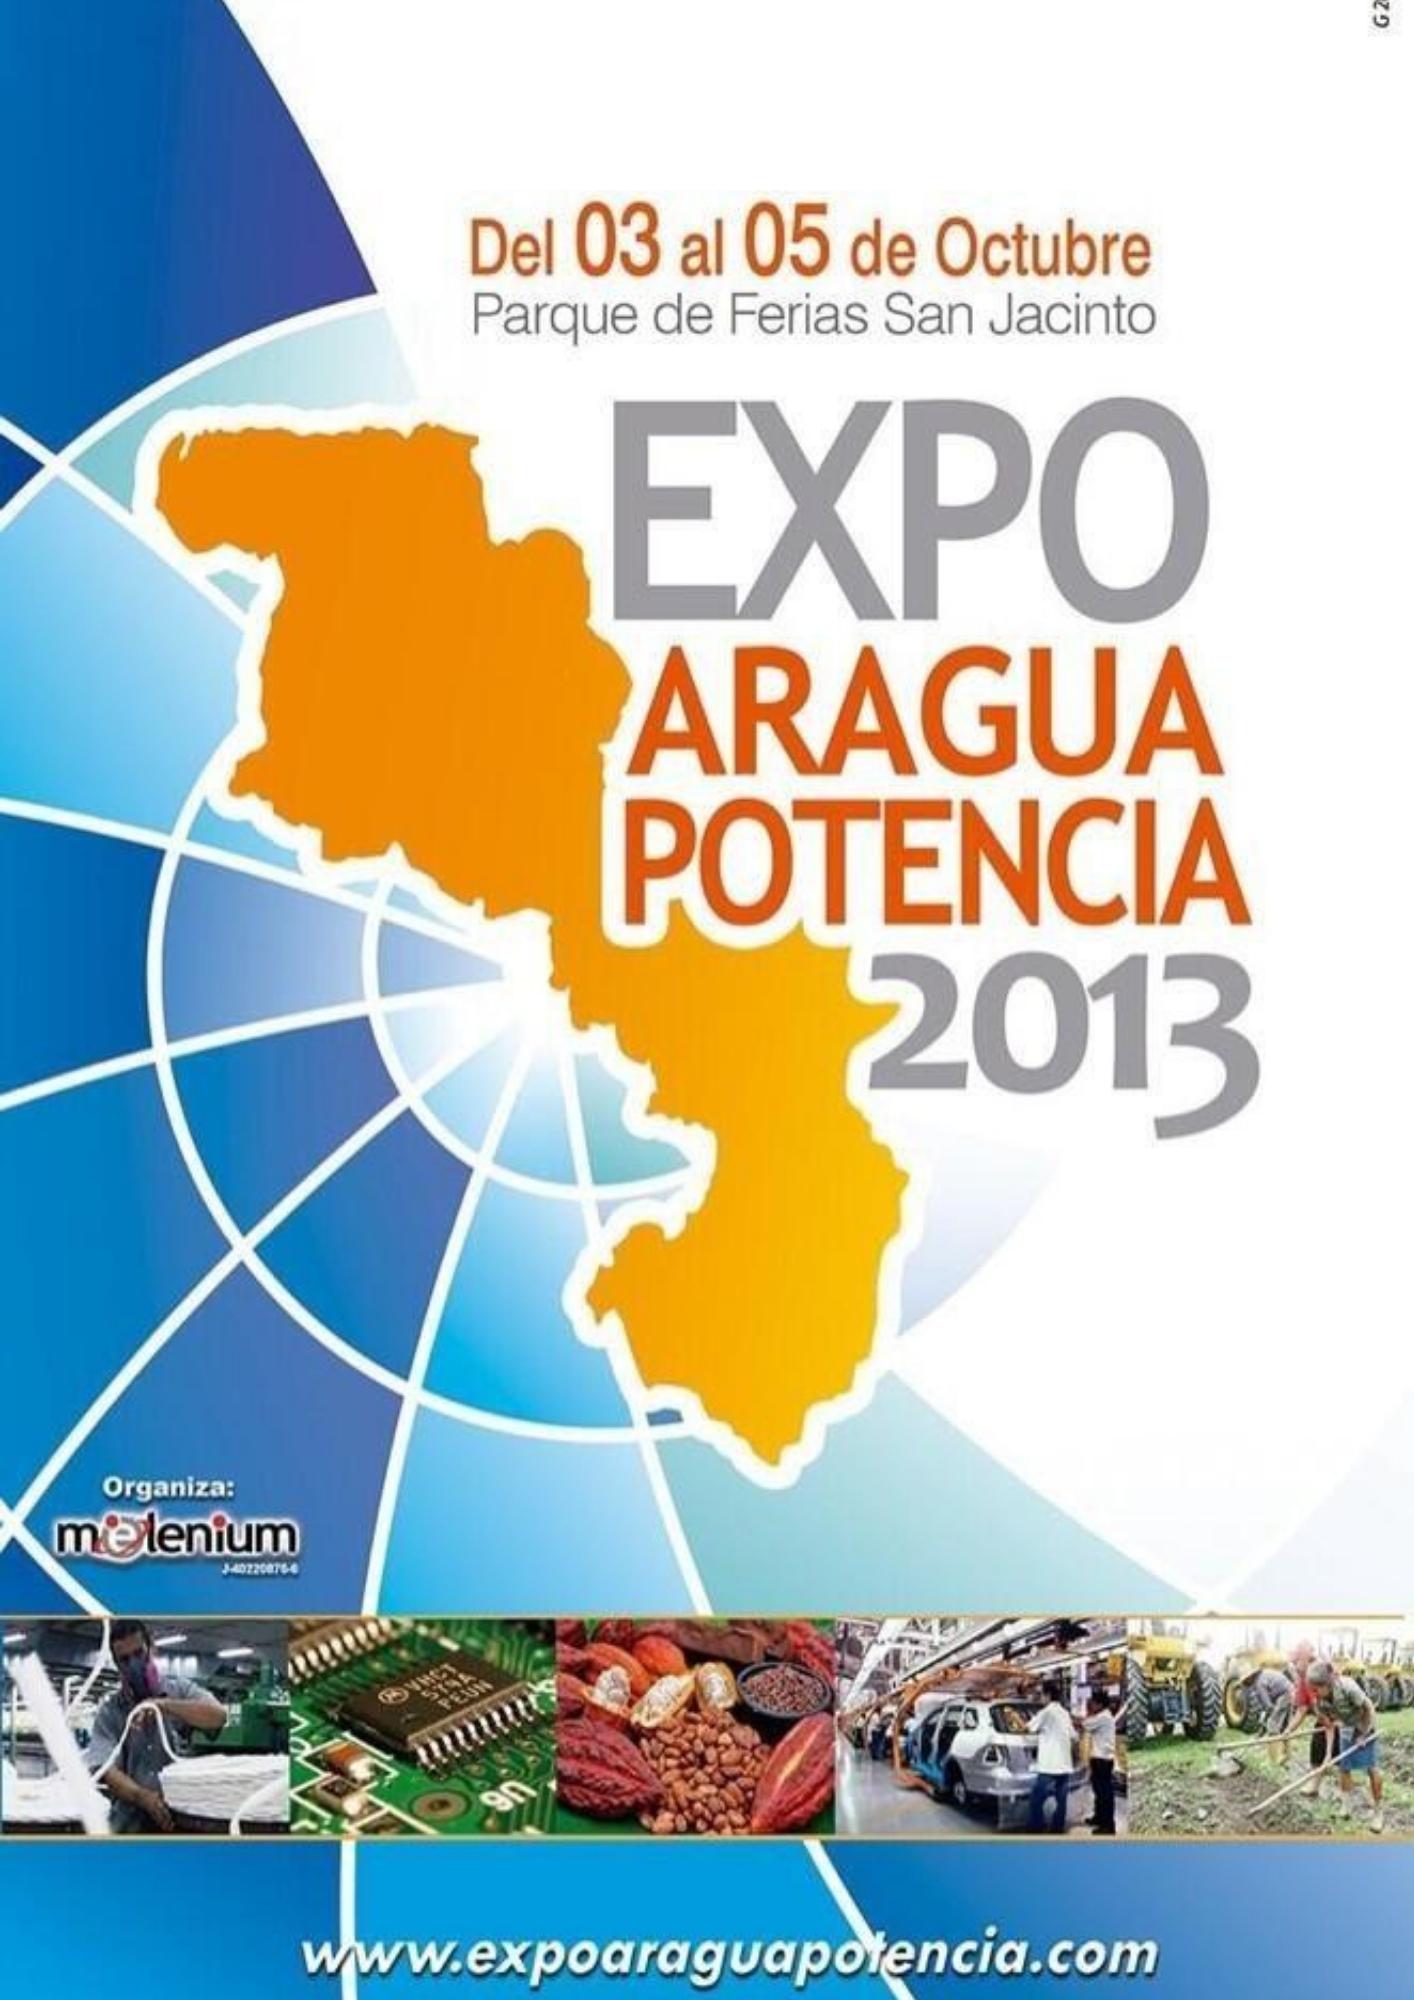 Expo-aragua-2013